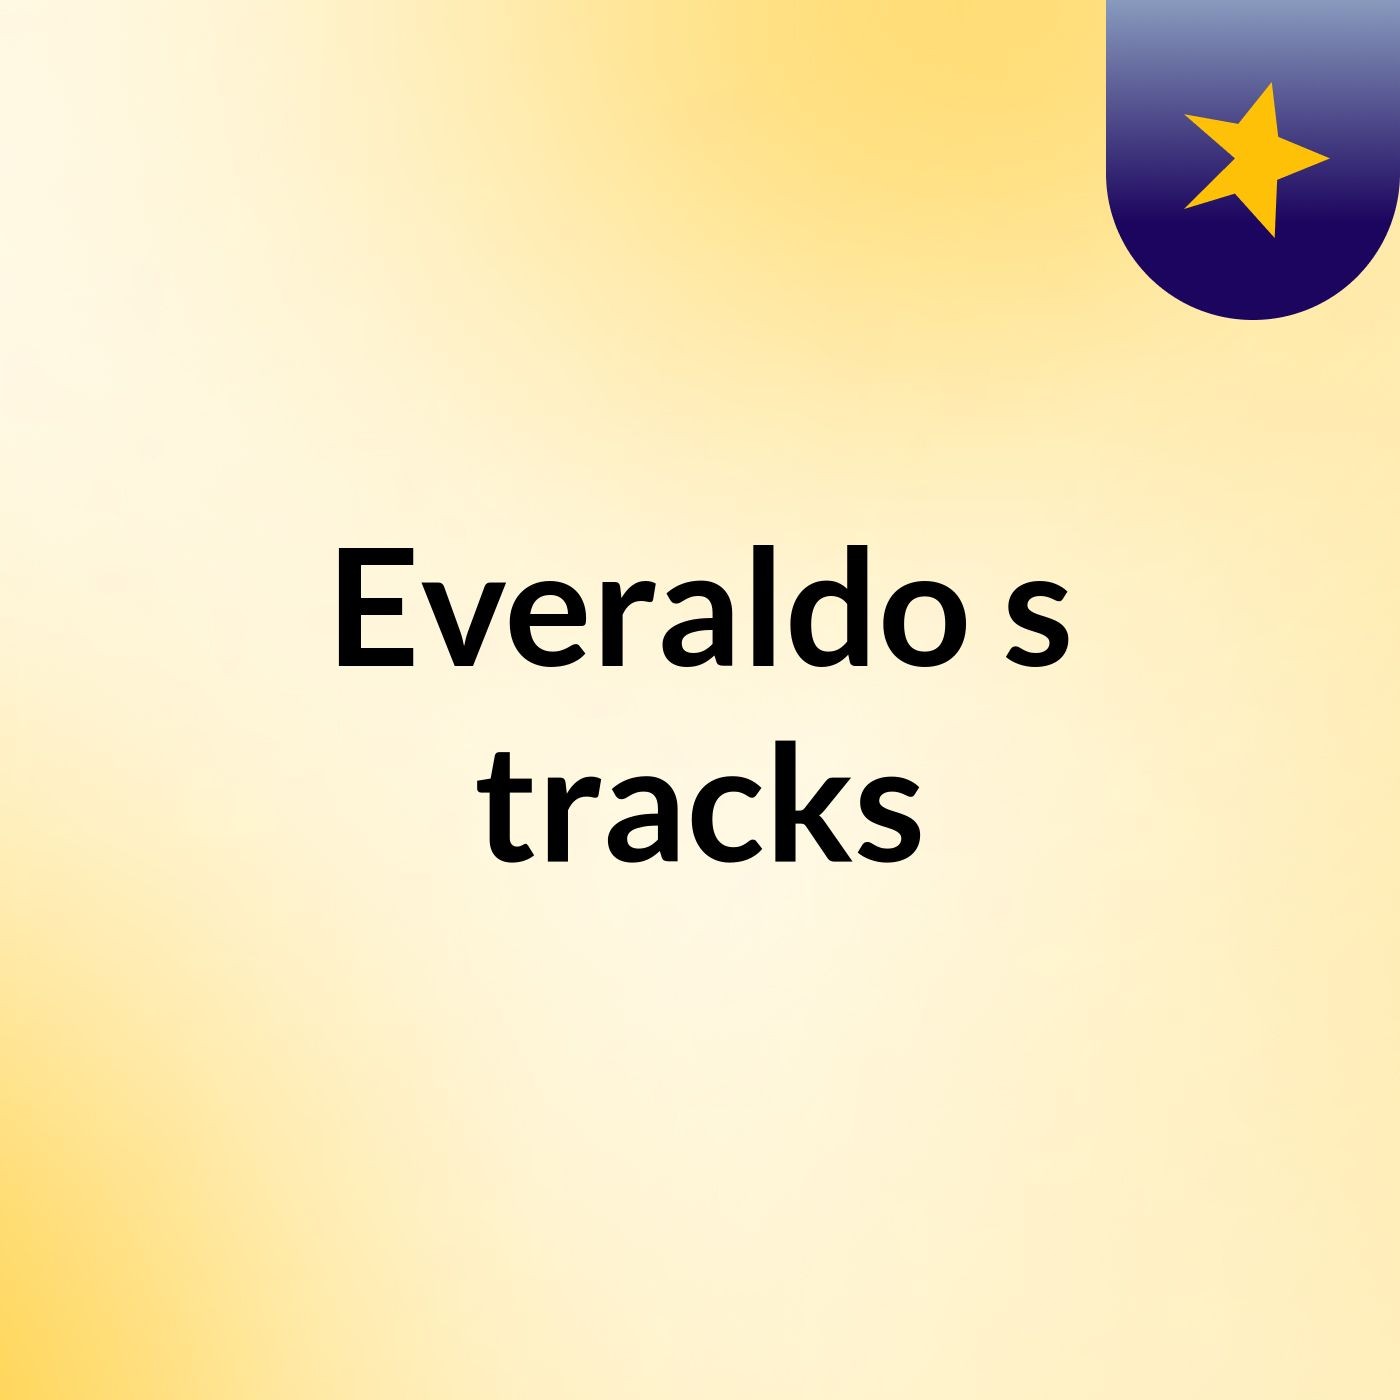 Everaldo's tracks